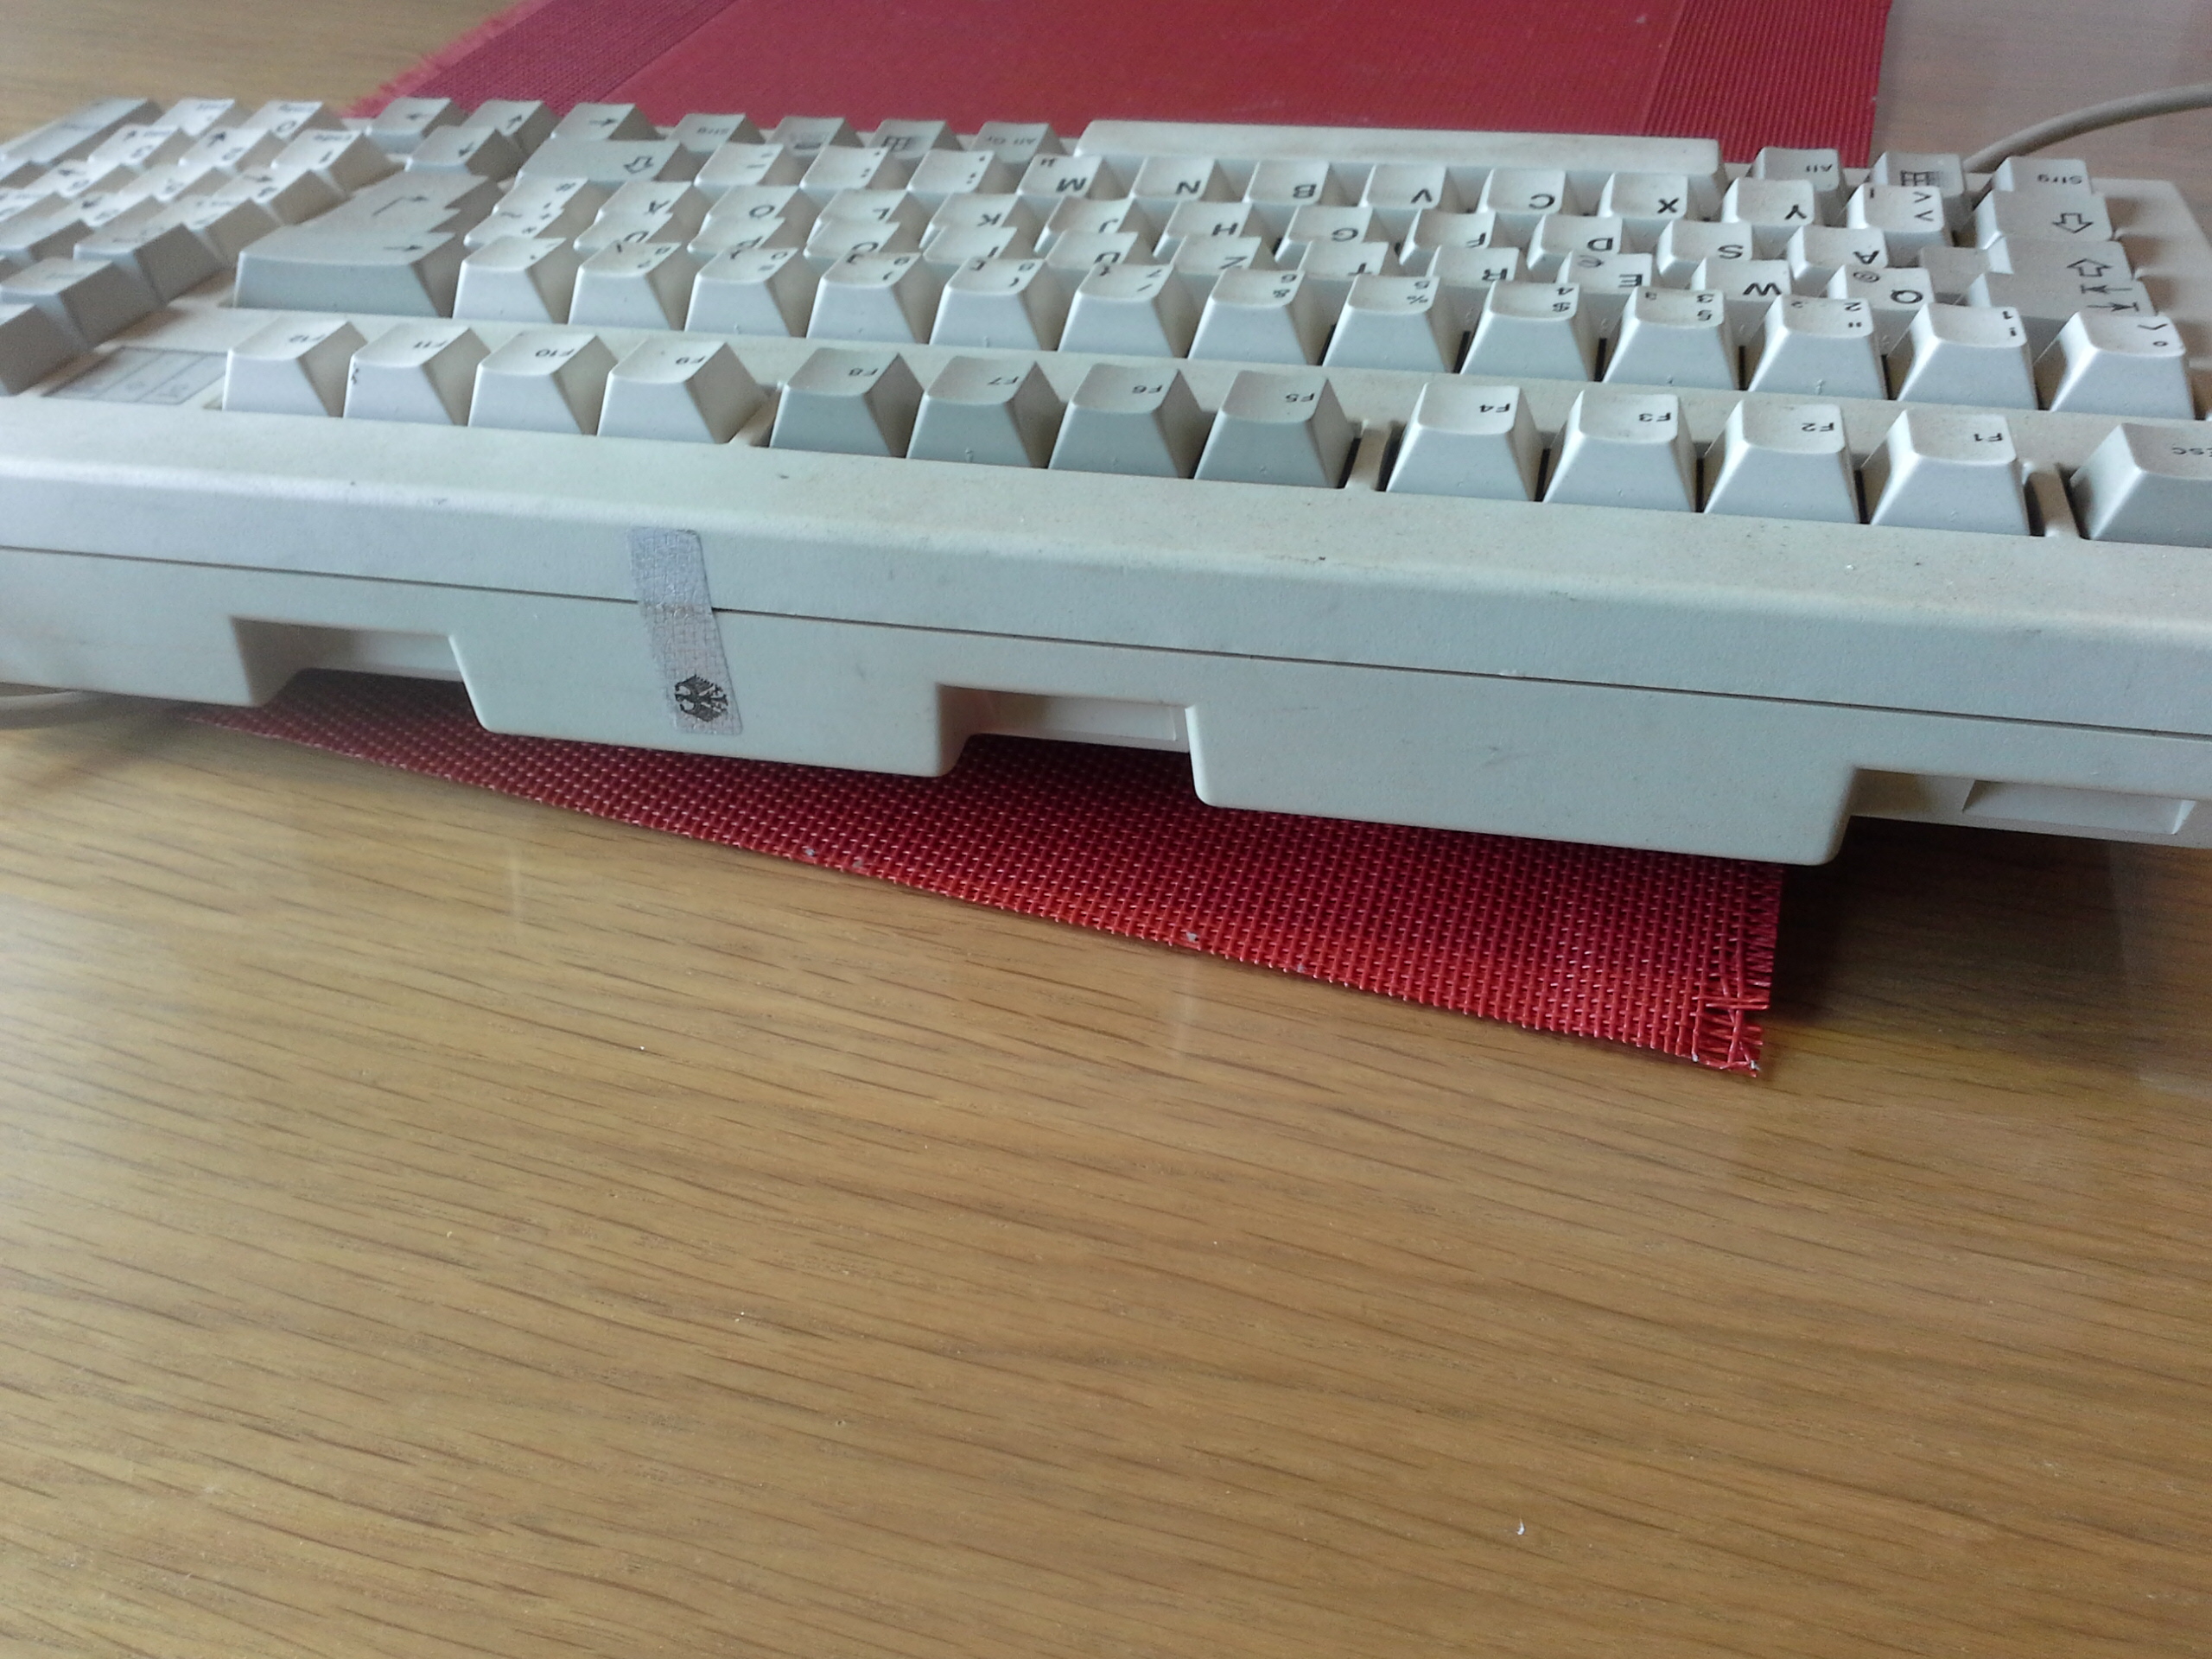 Tastatur, Cherry, Mod. MX 1800, mit 8 pol. Stecker